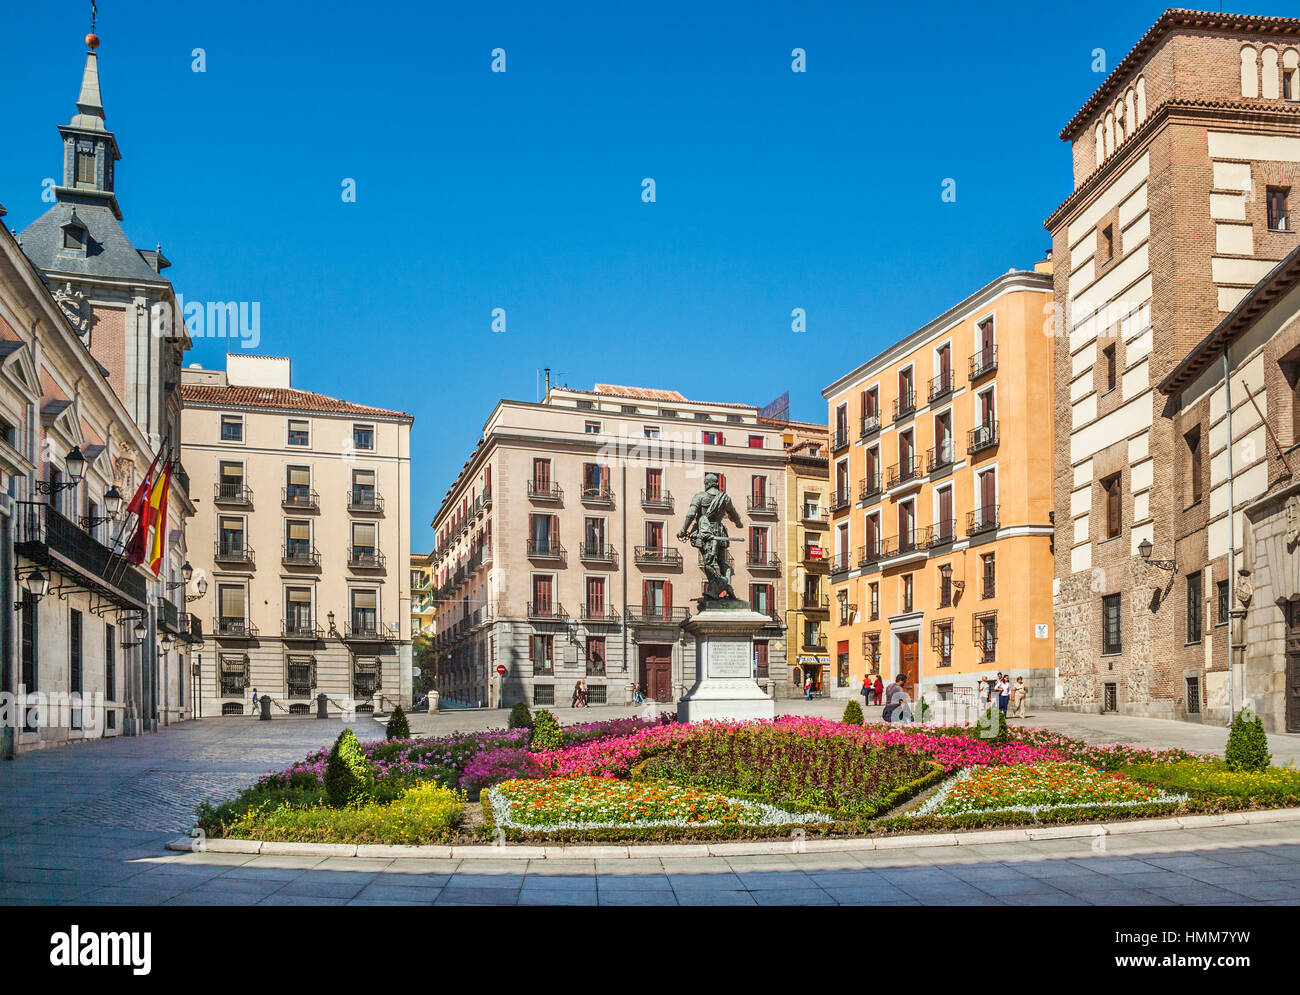 Spain, Madrid, Centro, Plaza de la Villa with the statue of Alvaro de Bazan, flanked by the Casa de la Villa, Town Hall and the Torre de los Lujanes b Stock Photo